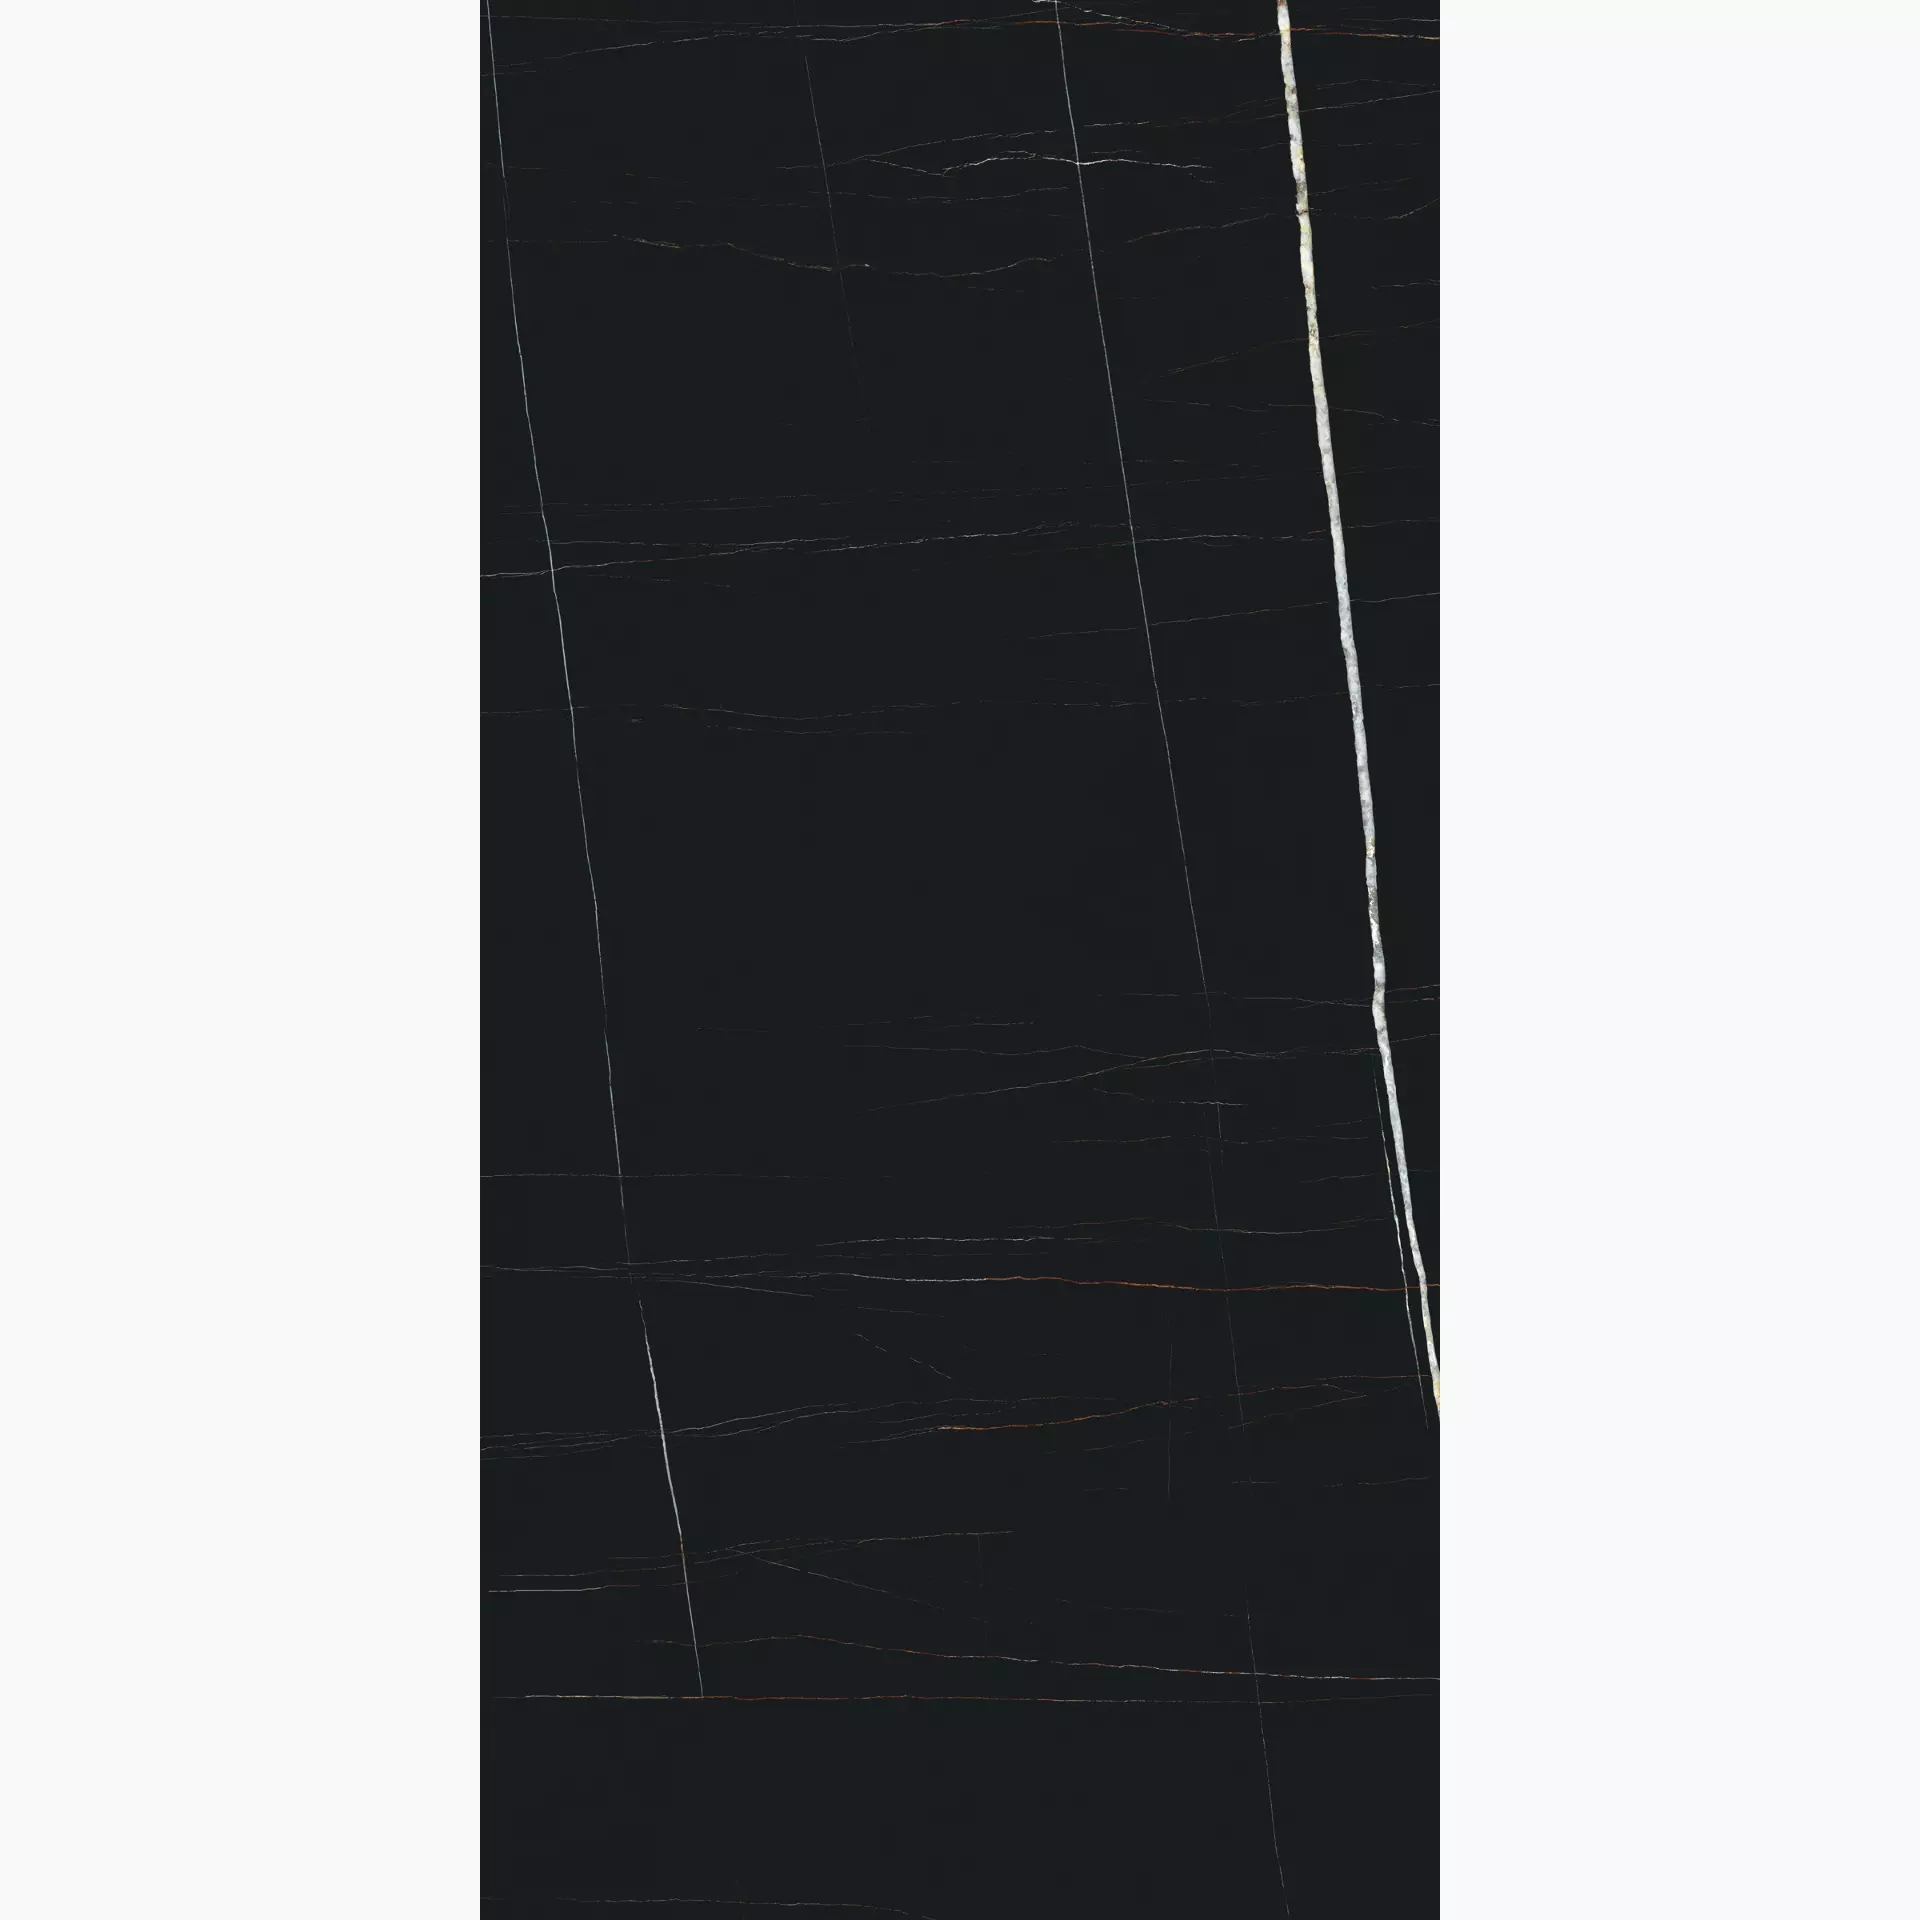 La Fabbrica AvA Sahara Noir Lappato 135061 gelaeppt 60x120cm rektifiziert 8,8mm